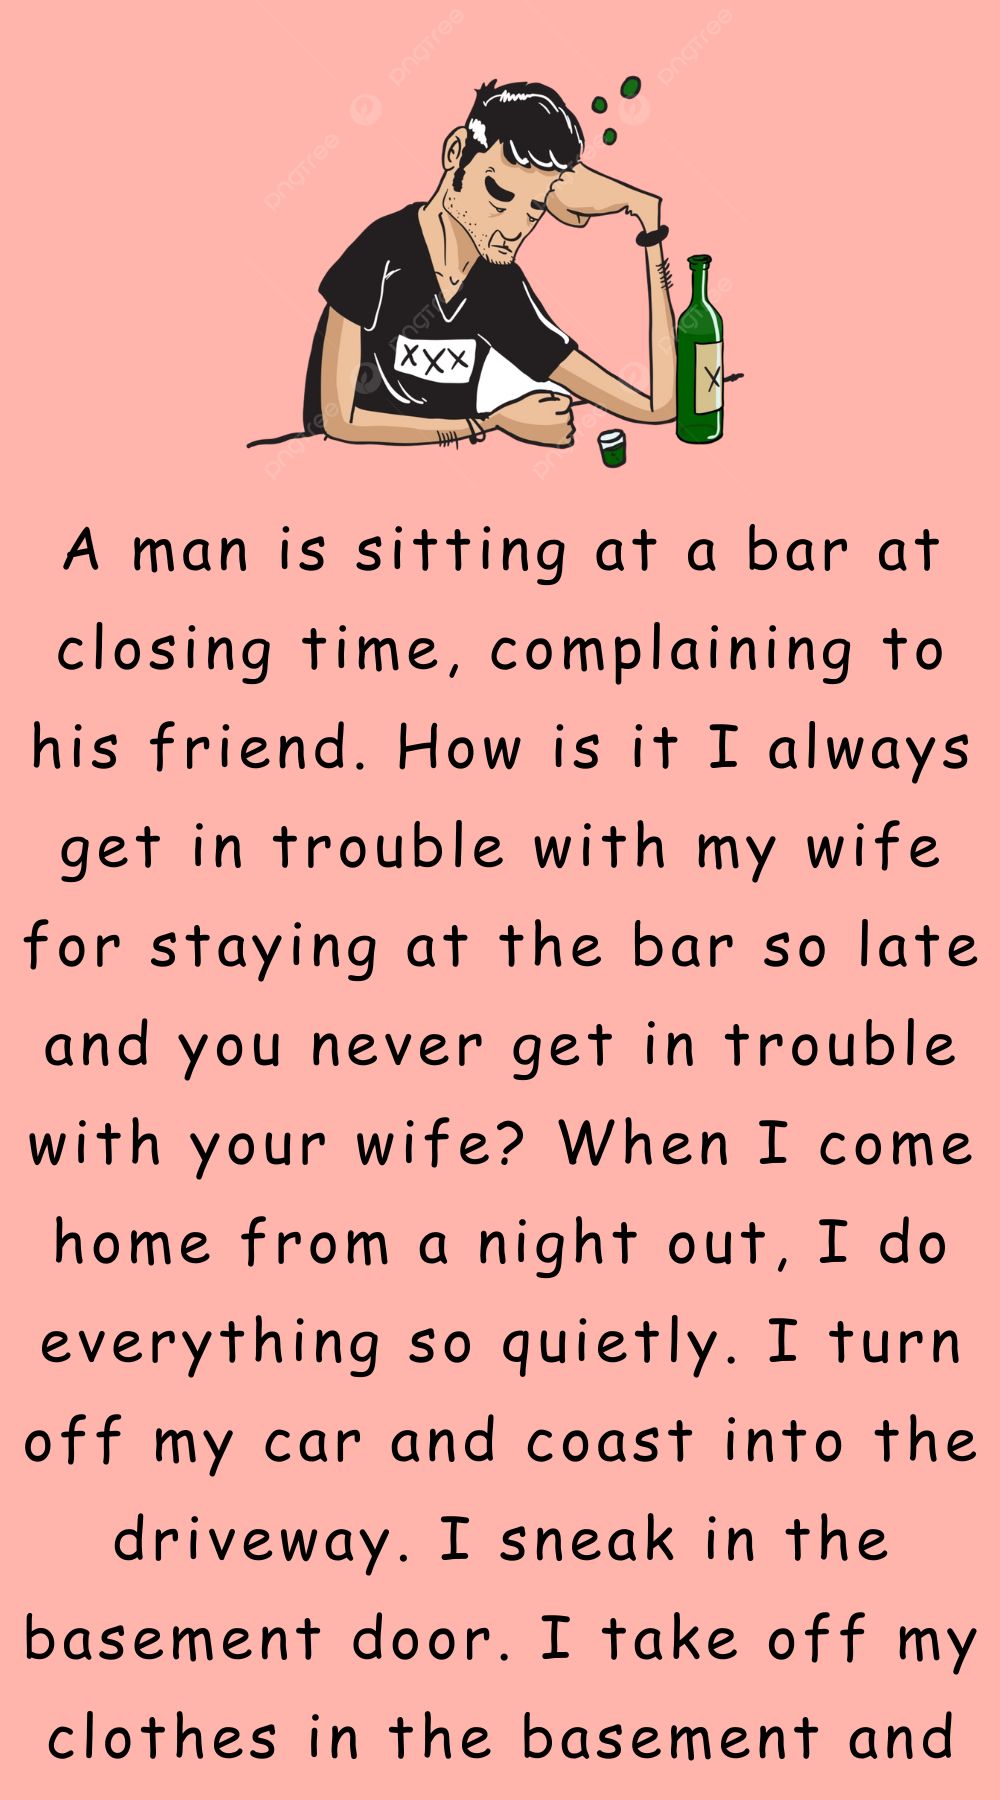 A man is sitting at a bar